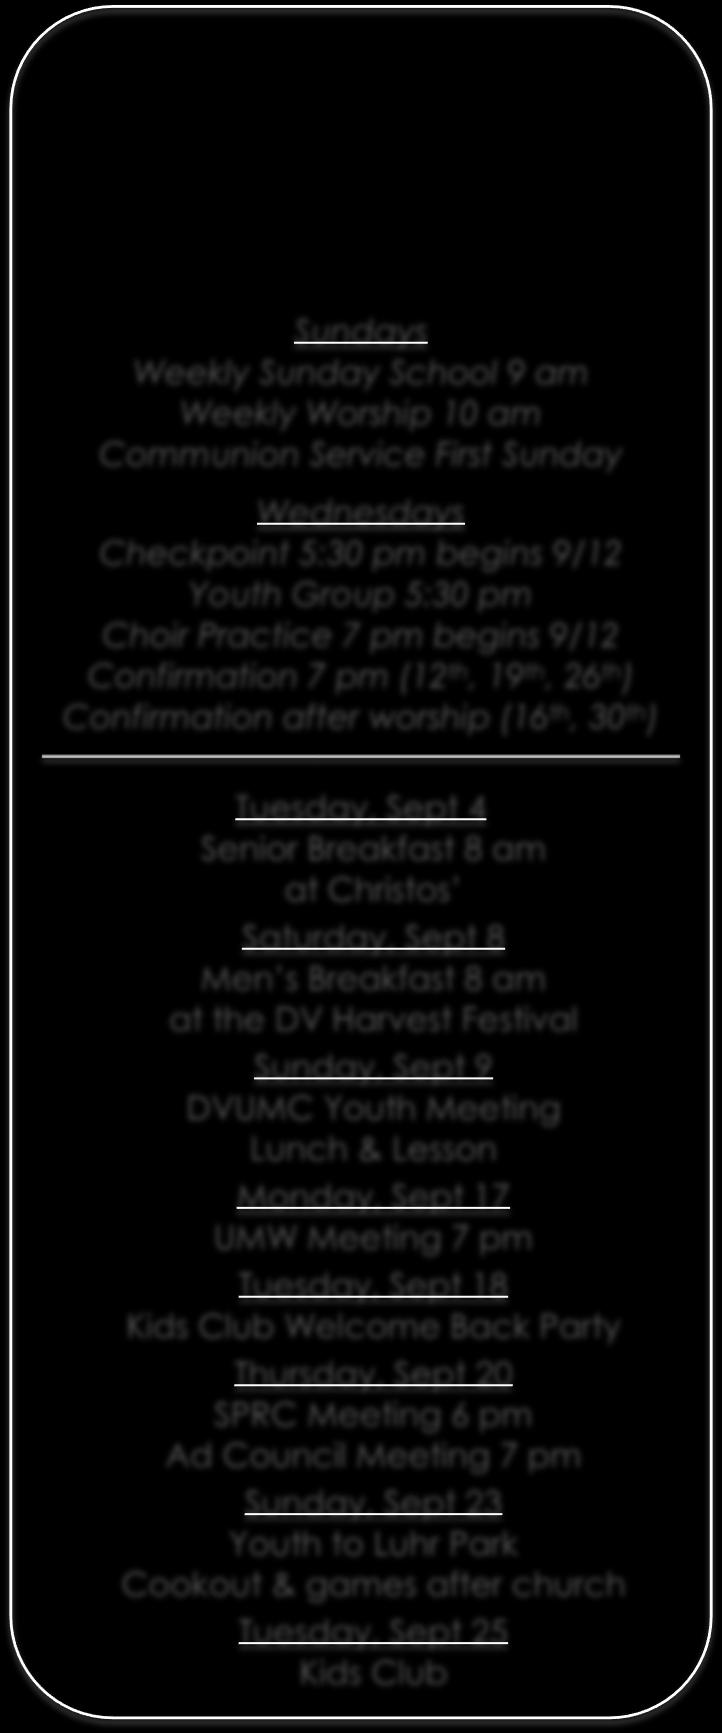 Choir Practice 7 pm begins 9/12 Confirmation 7 pm (12